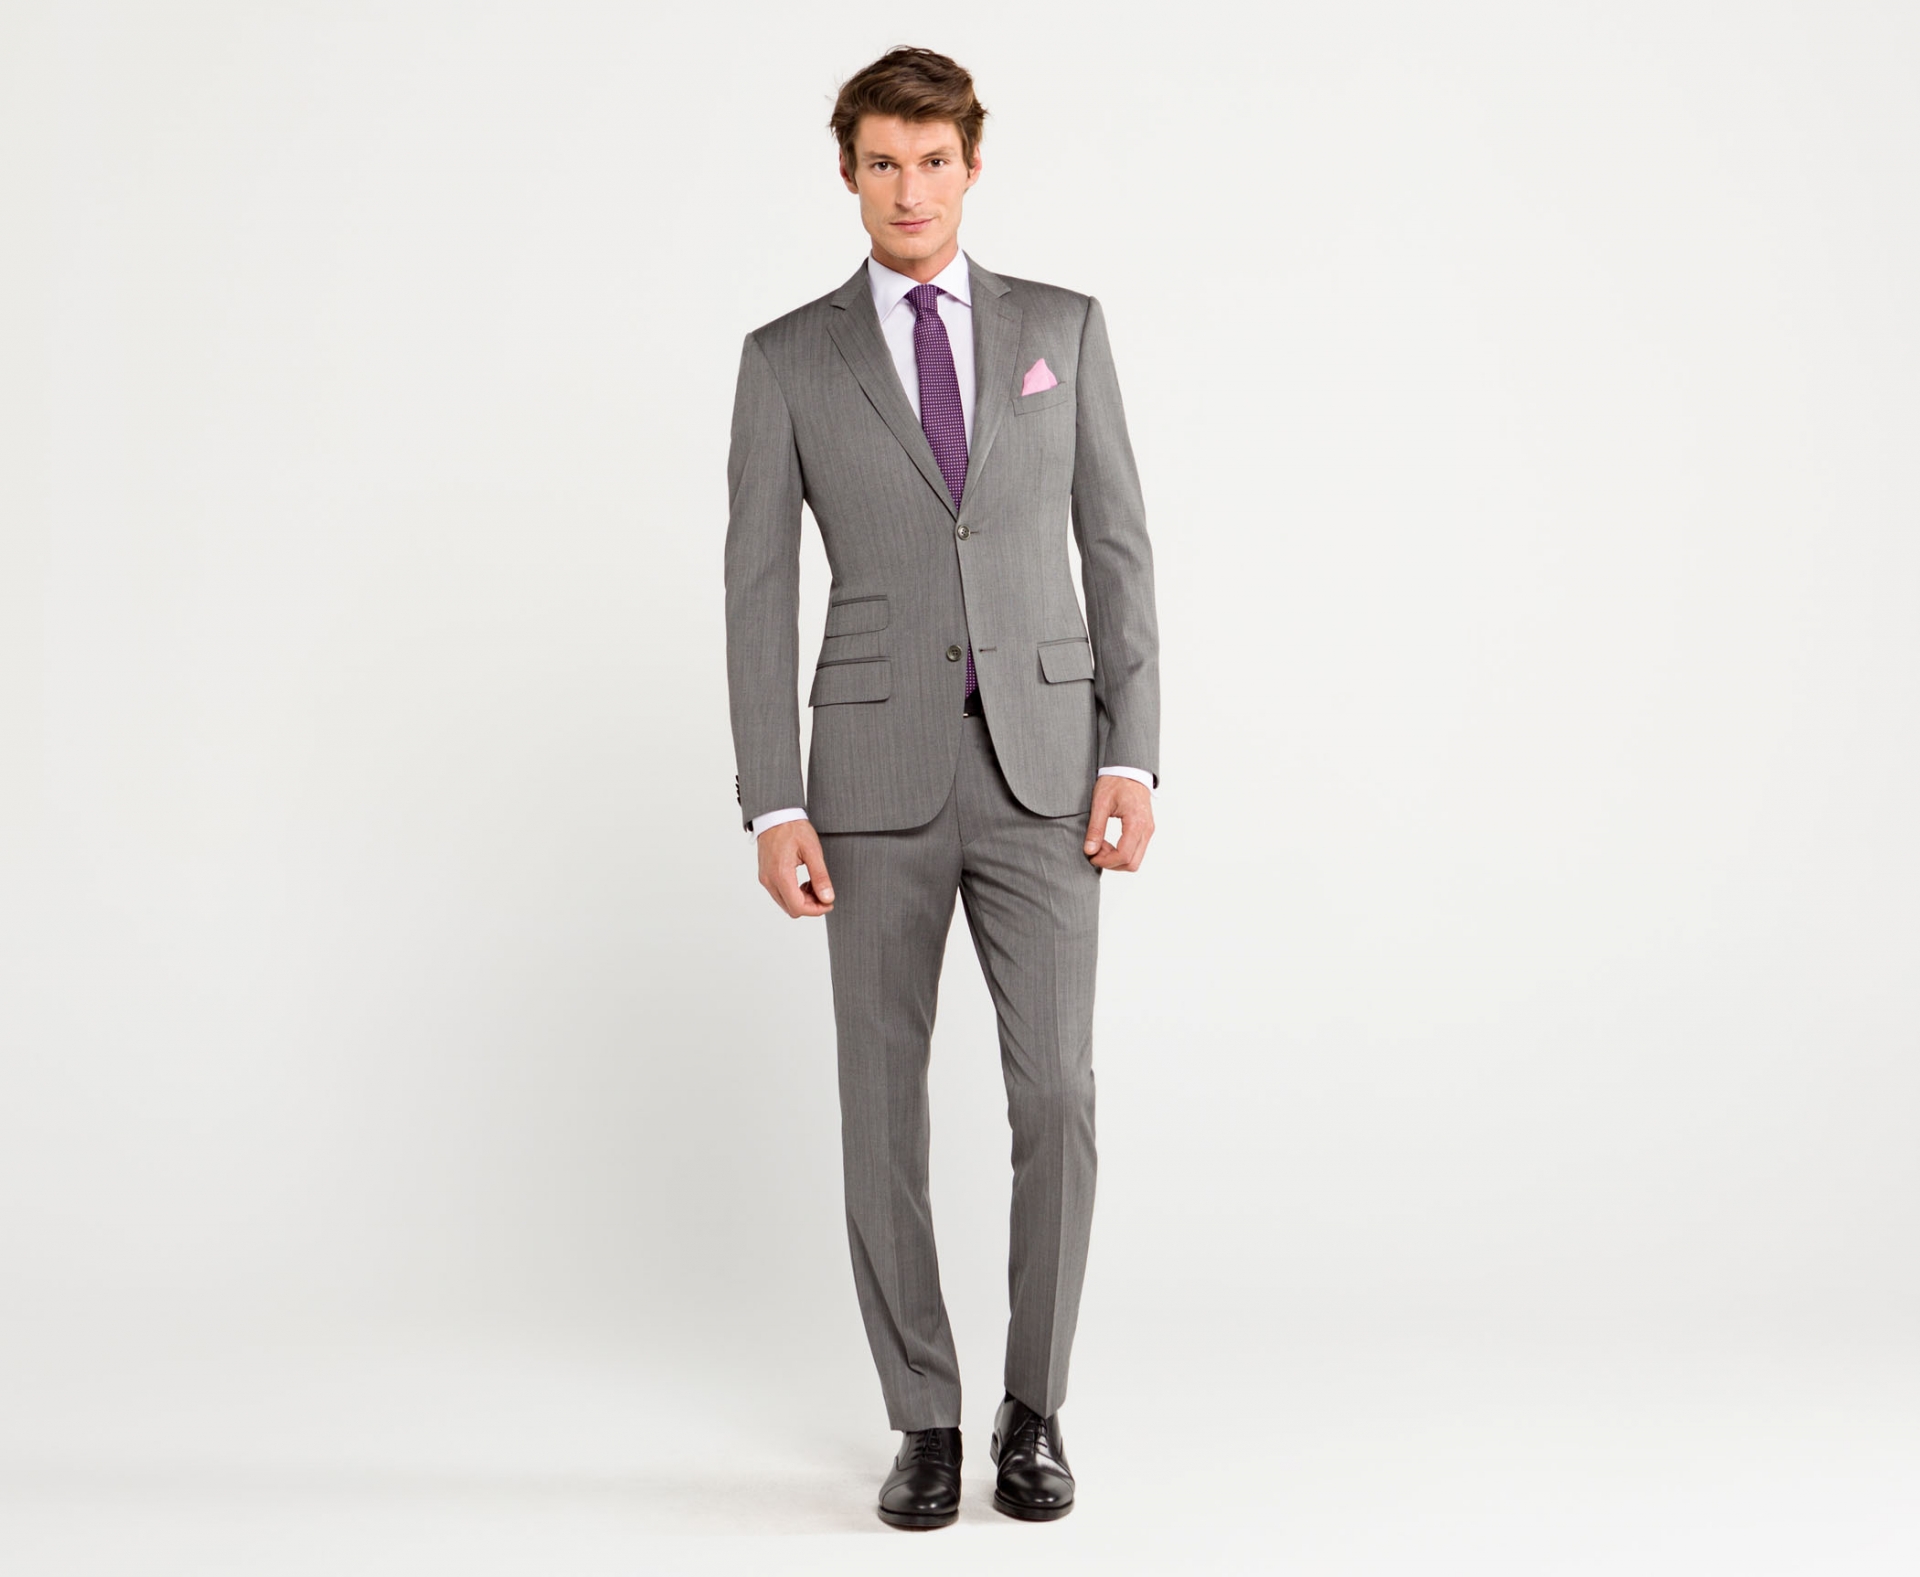 Monti Wool Light | Herringbone Grey Mansolutely Tailored Suit